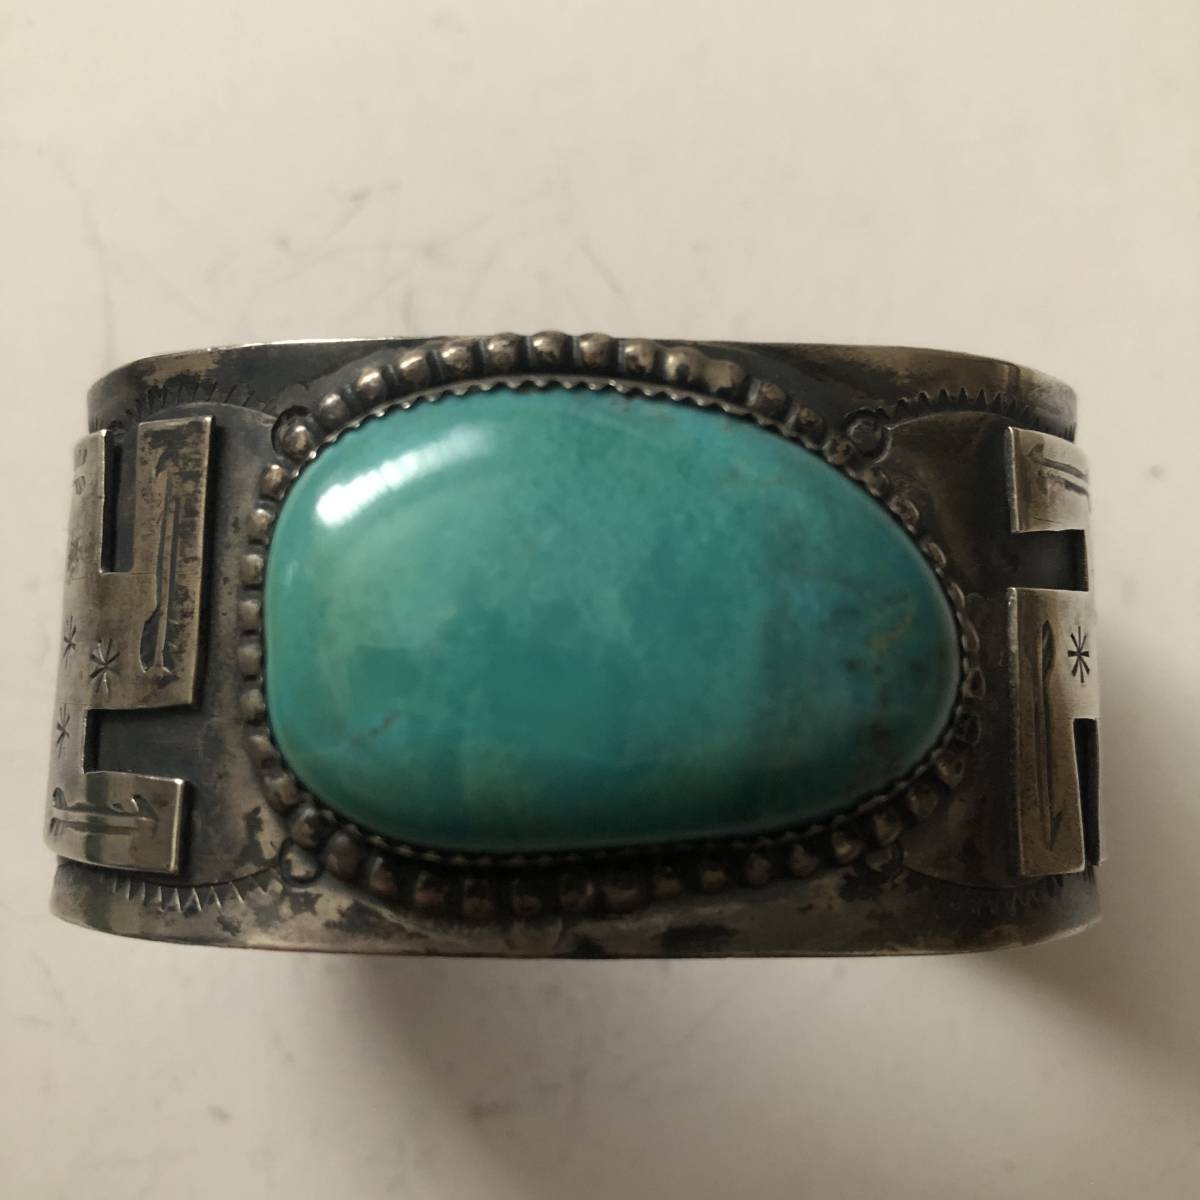  super rare Navajo . design silver bangle Vintage bracele Vintage Indian jewelry Navajo group 30S 40S 50S 60S